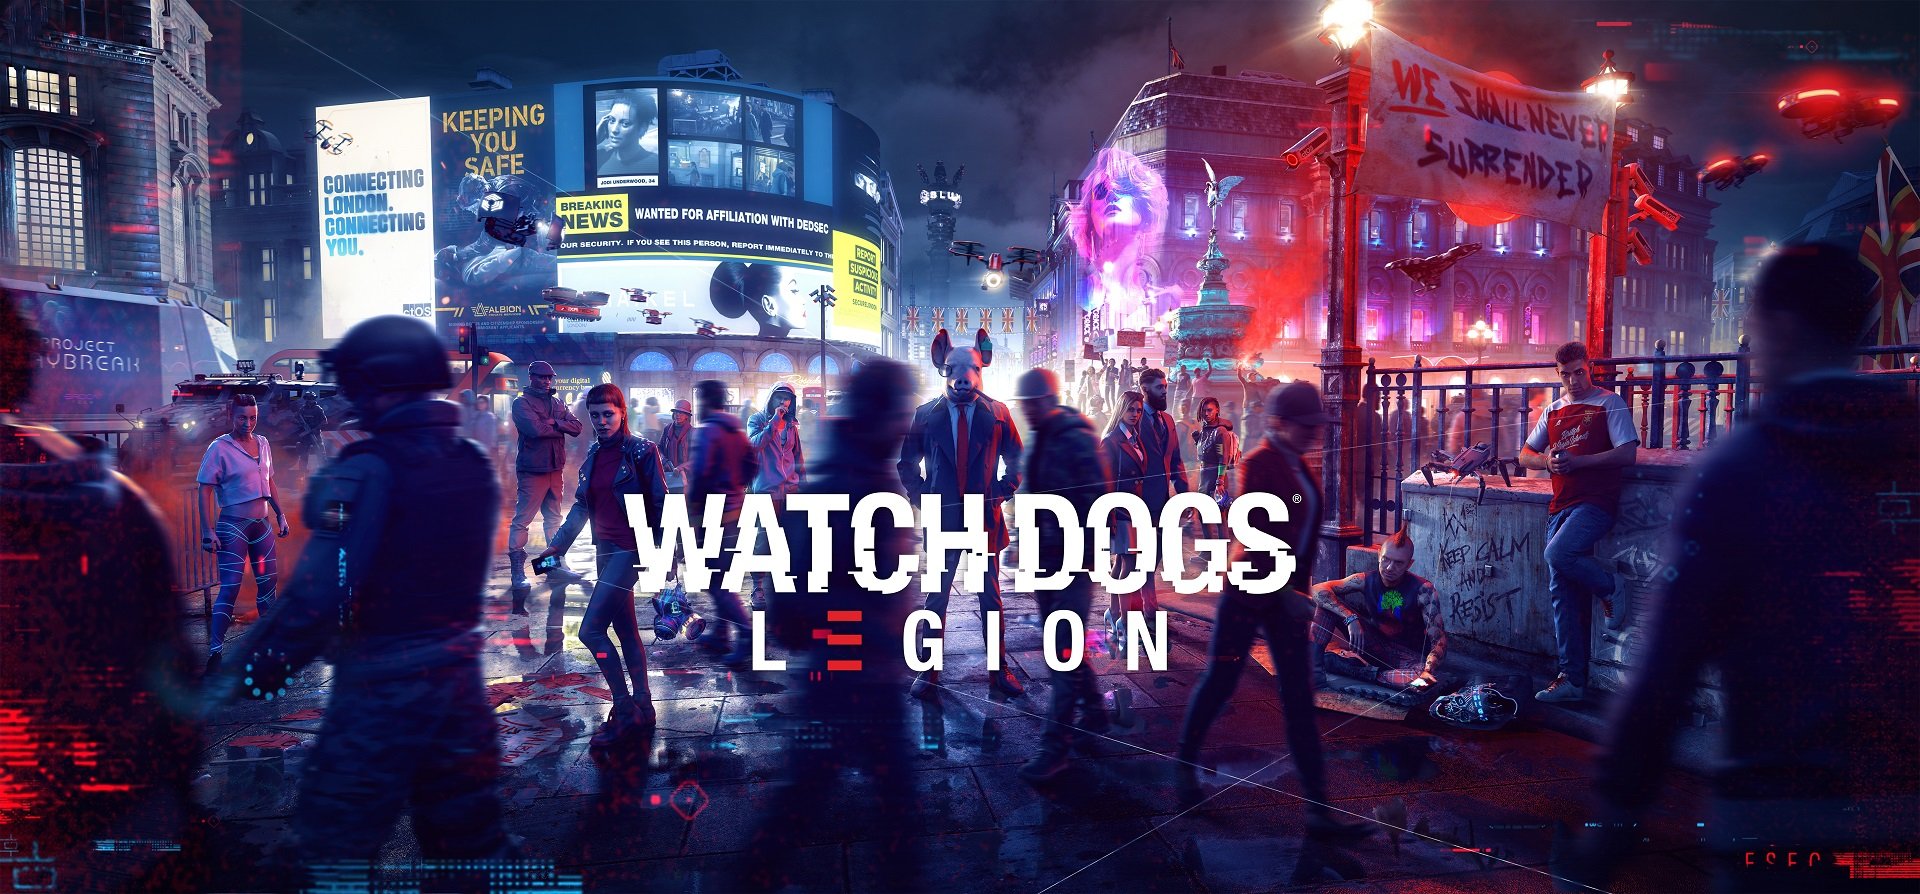 watch-dogs-legion-title-background.jpg